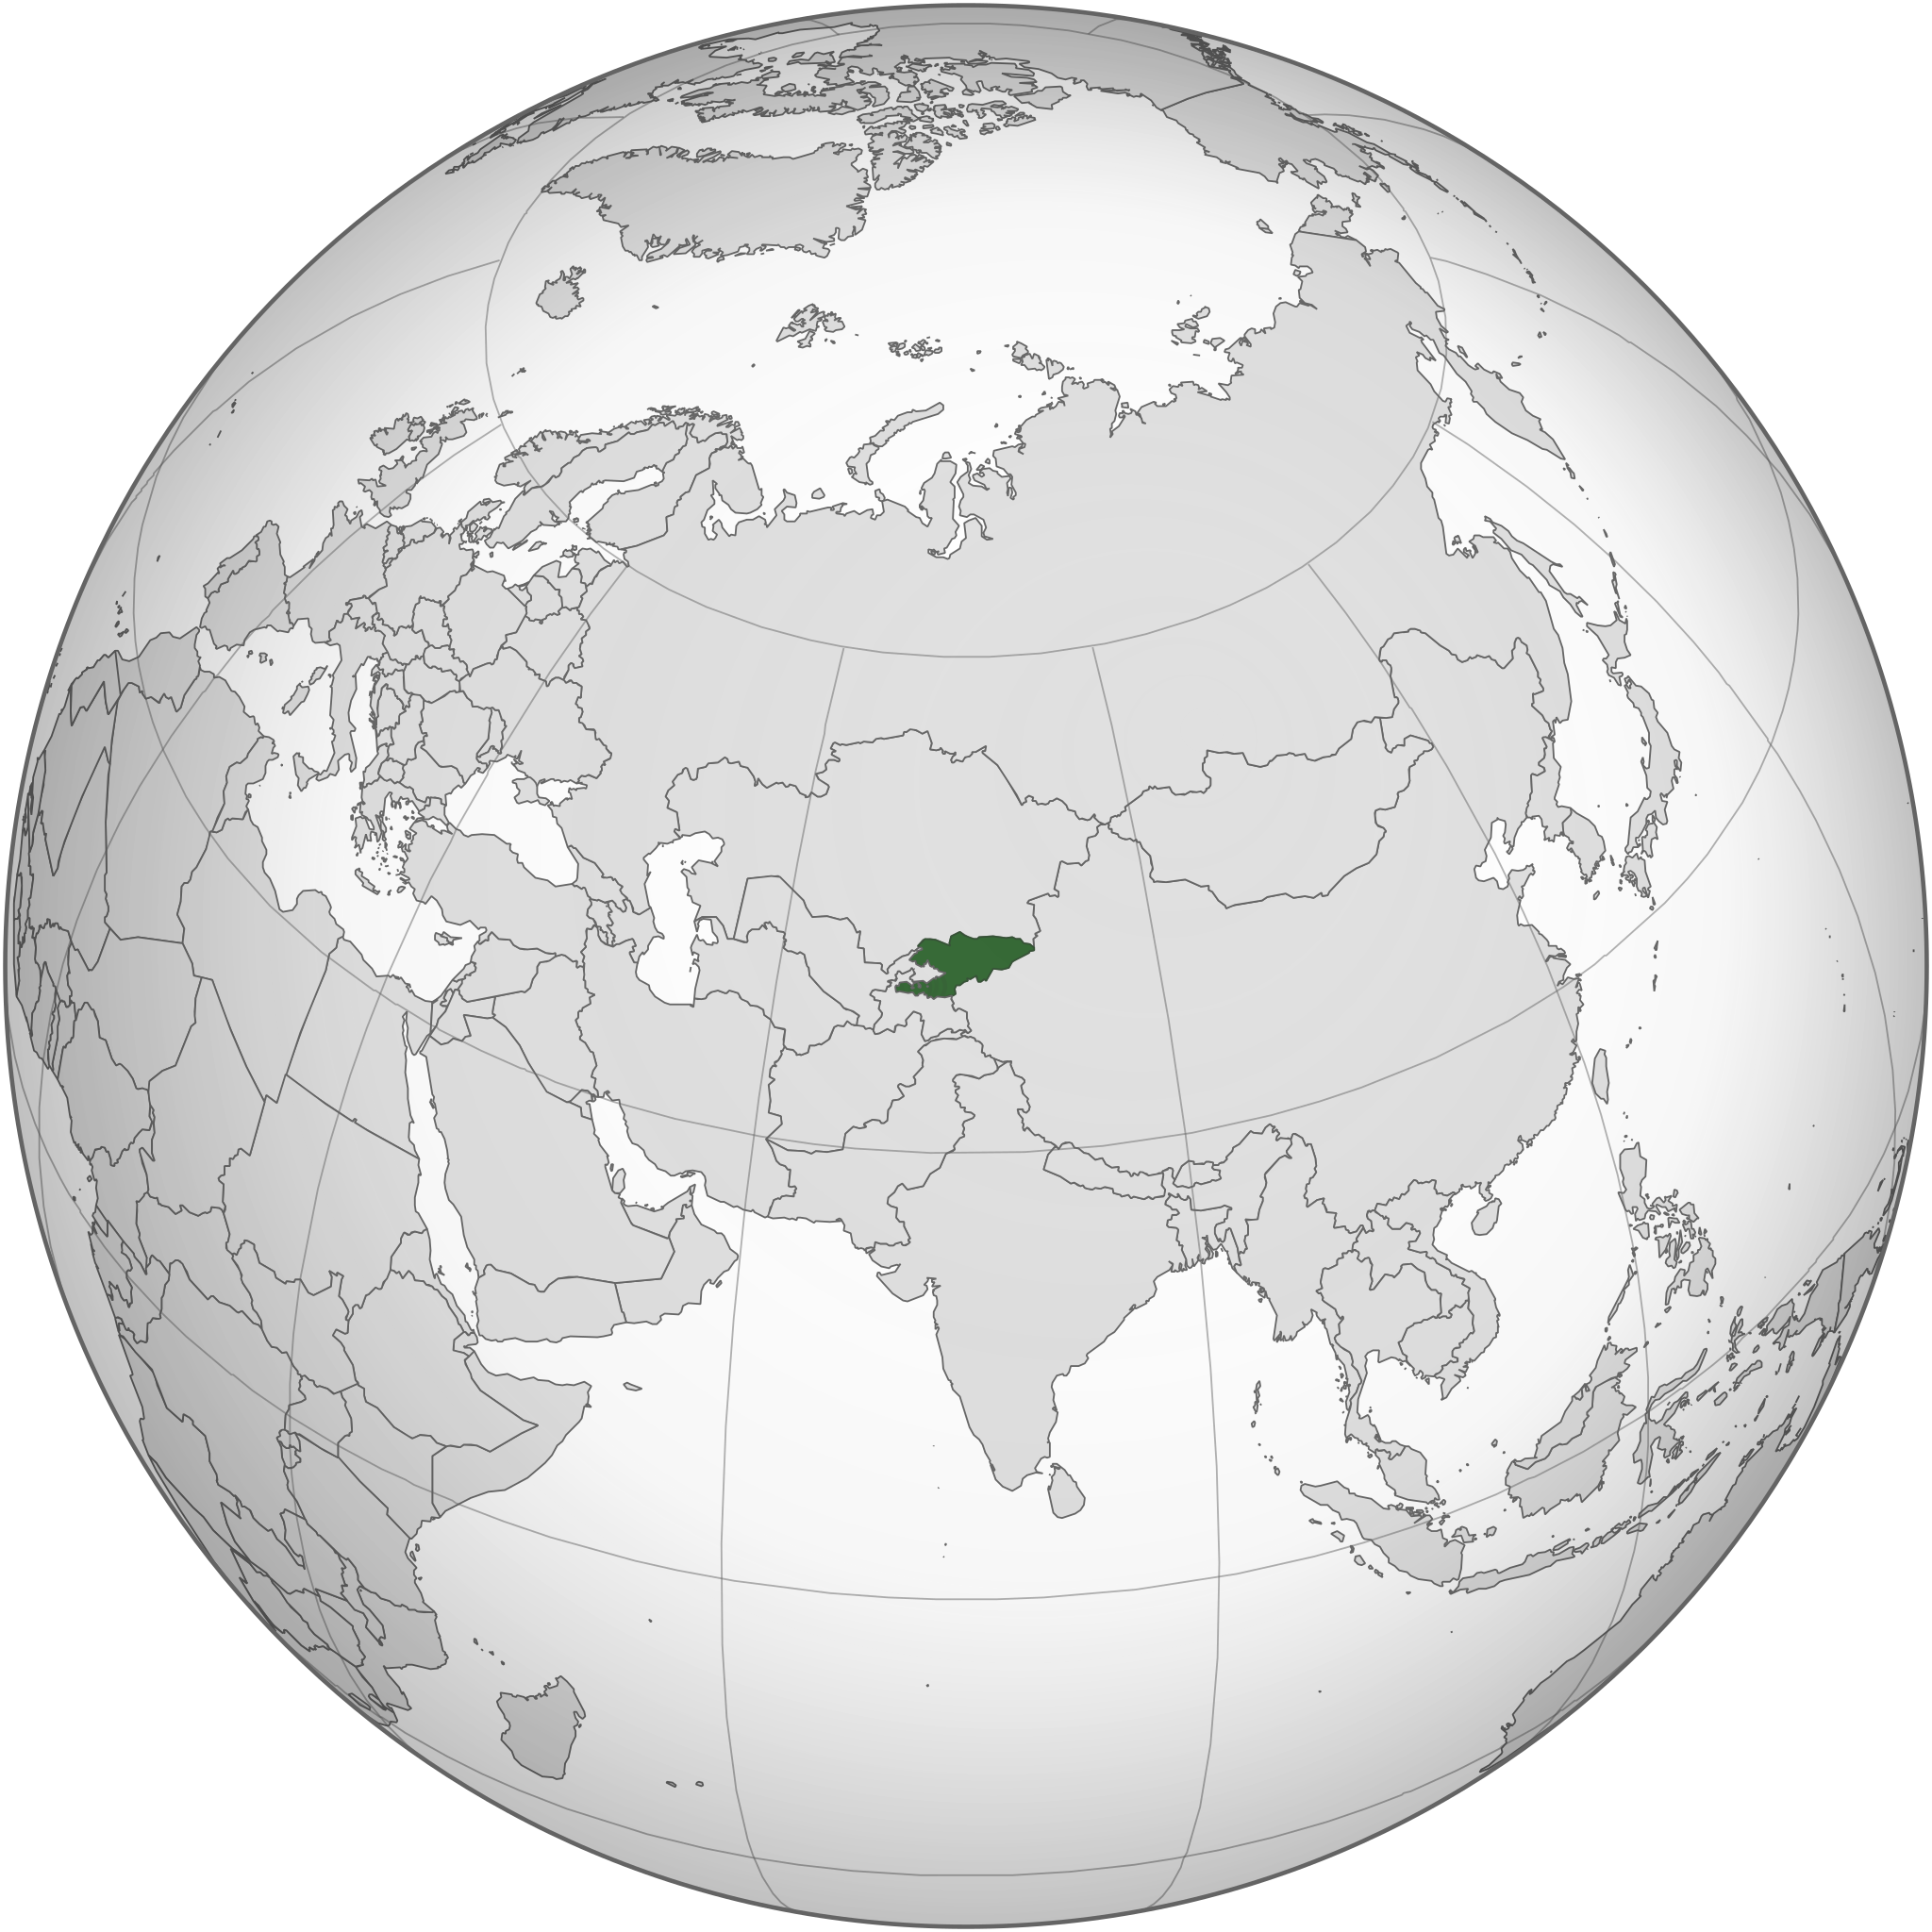 File:Kyrgyzstan map.png